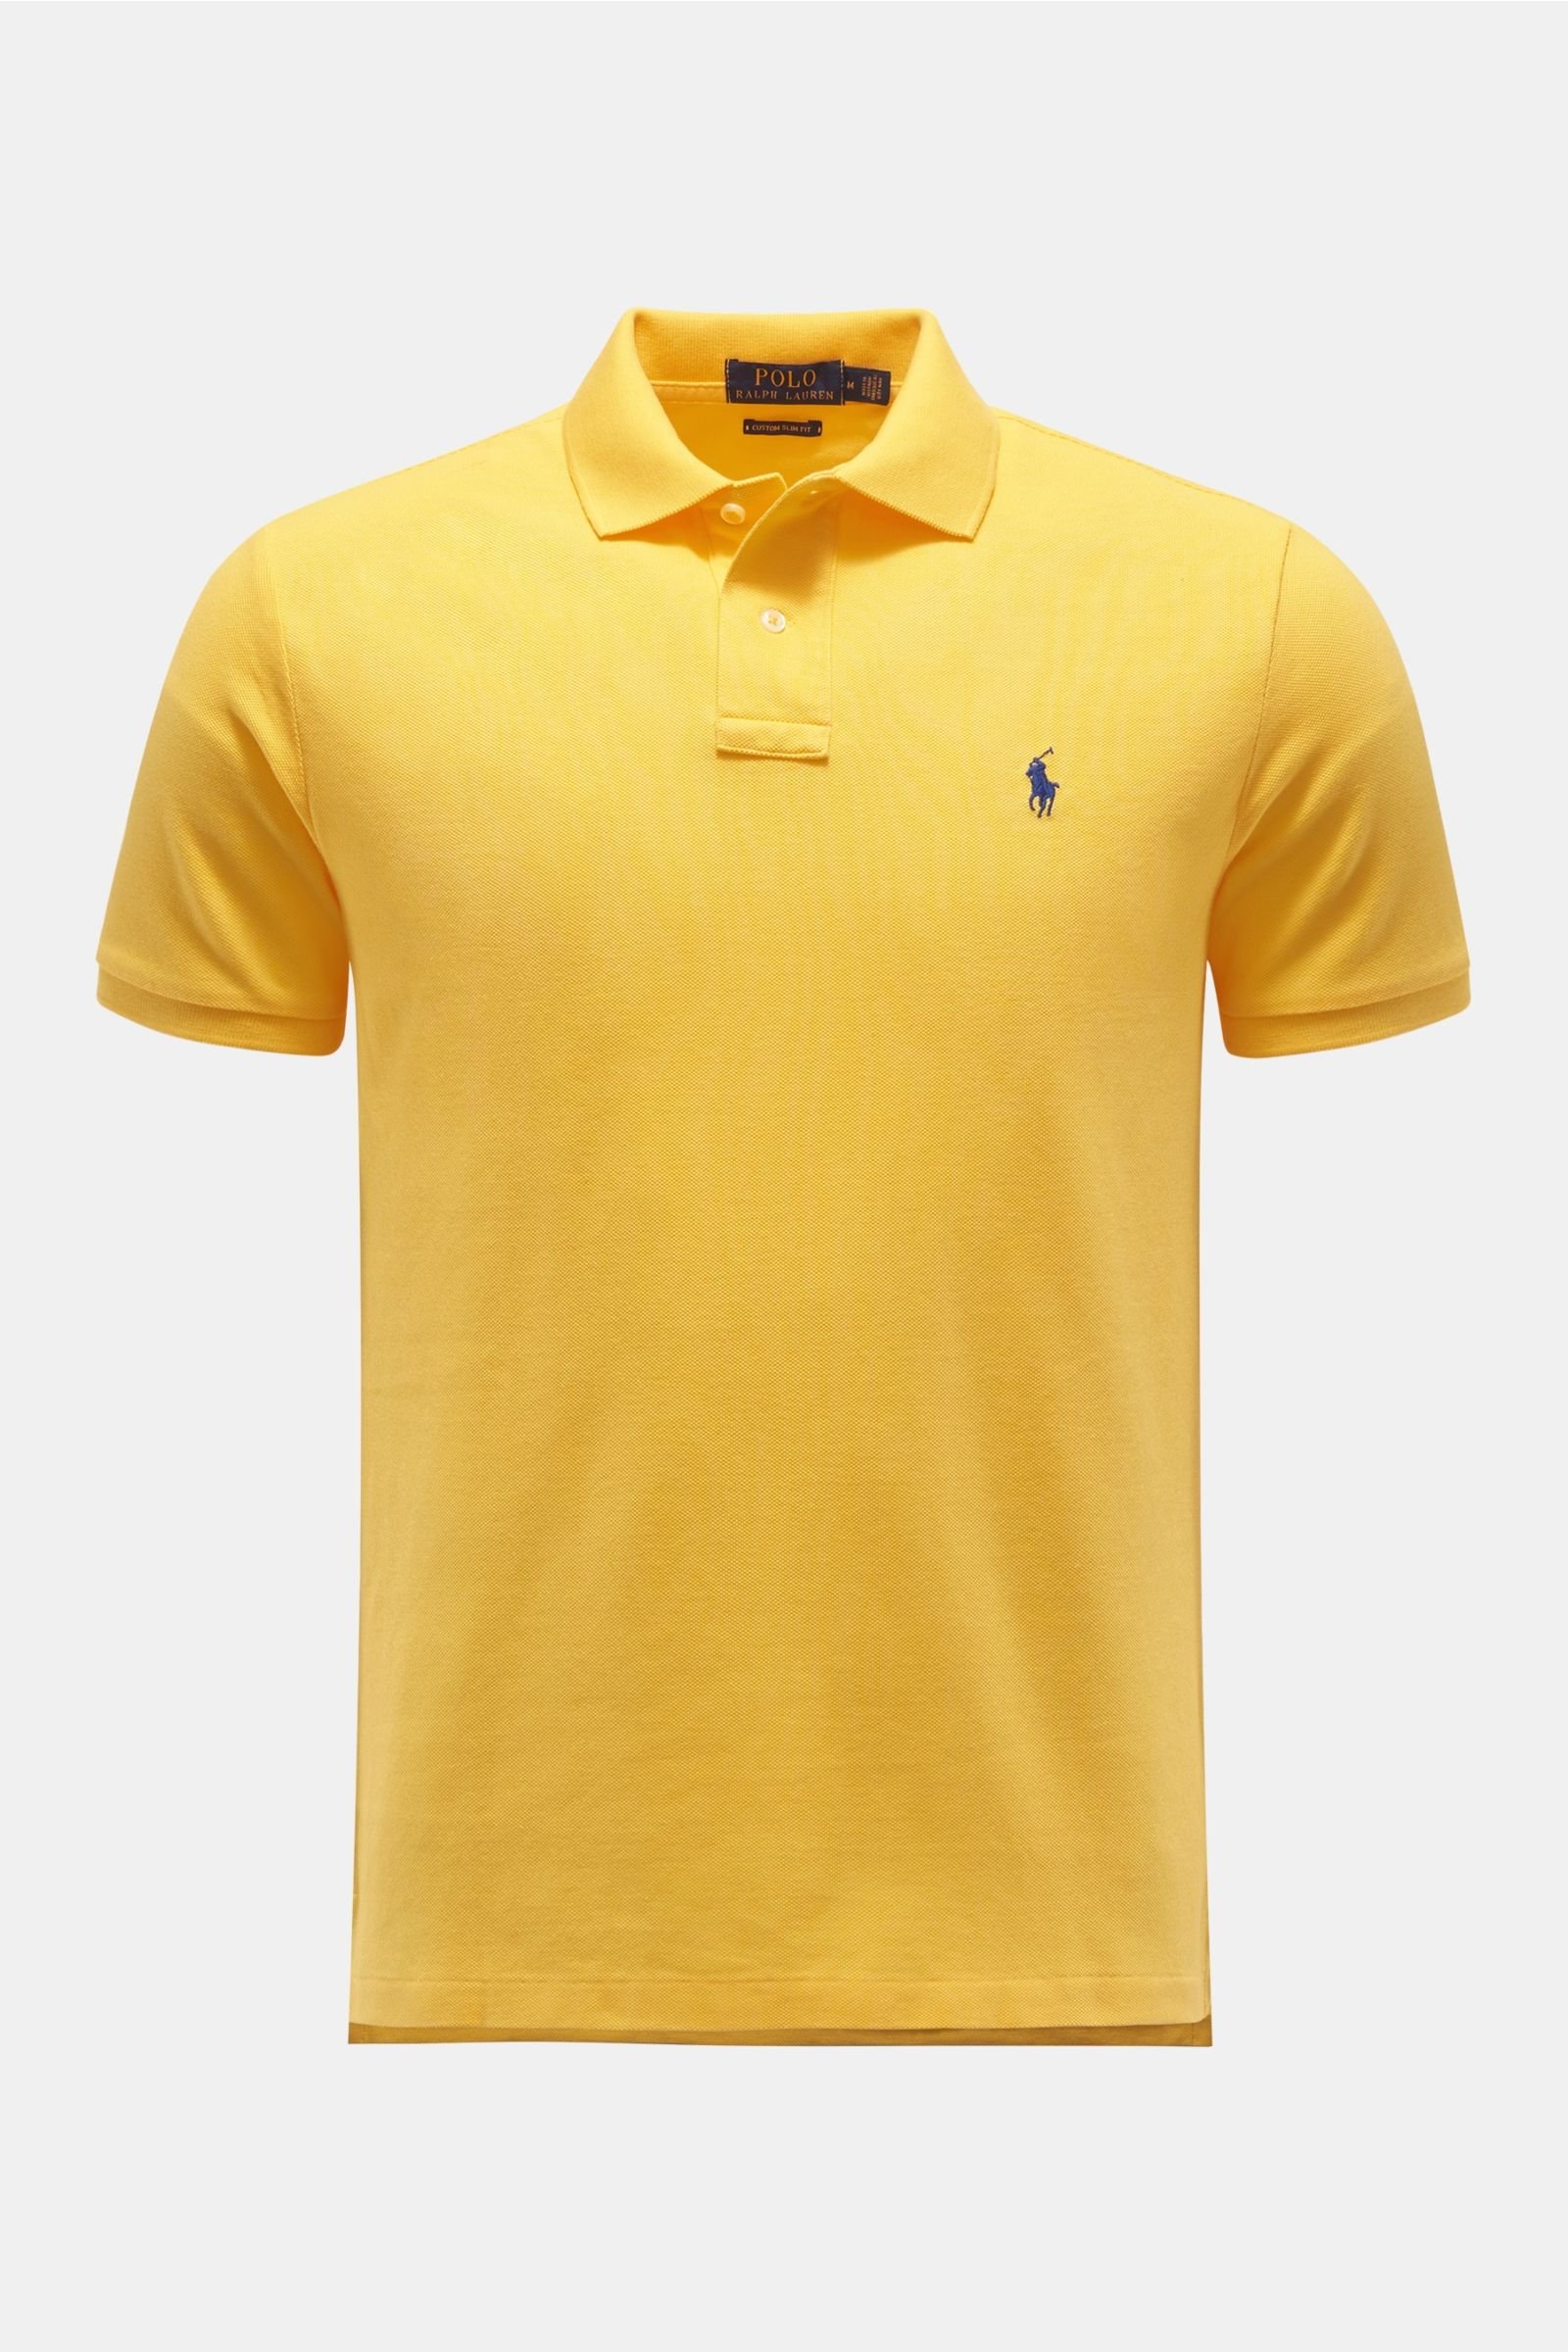 POLO RALPH LAUREN polo shirt yellow 